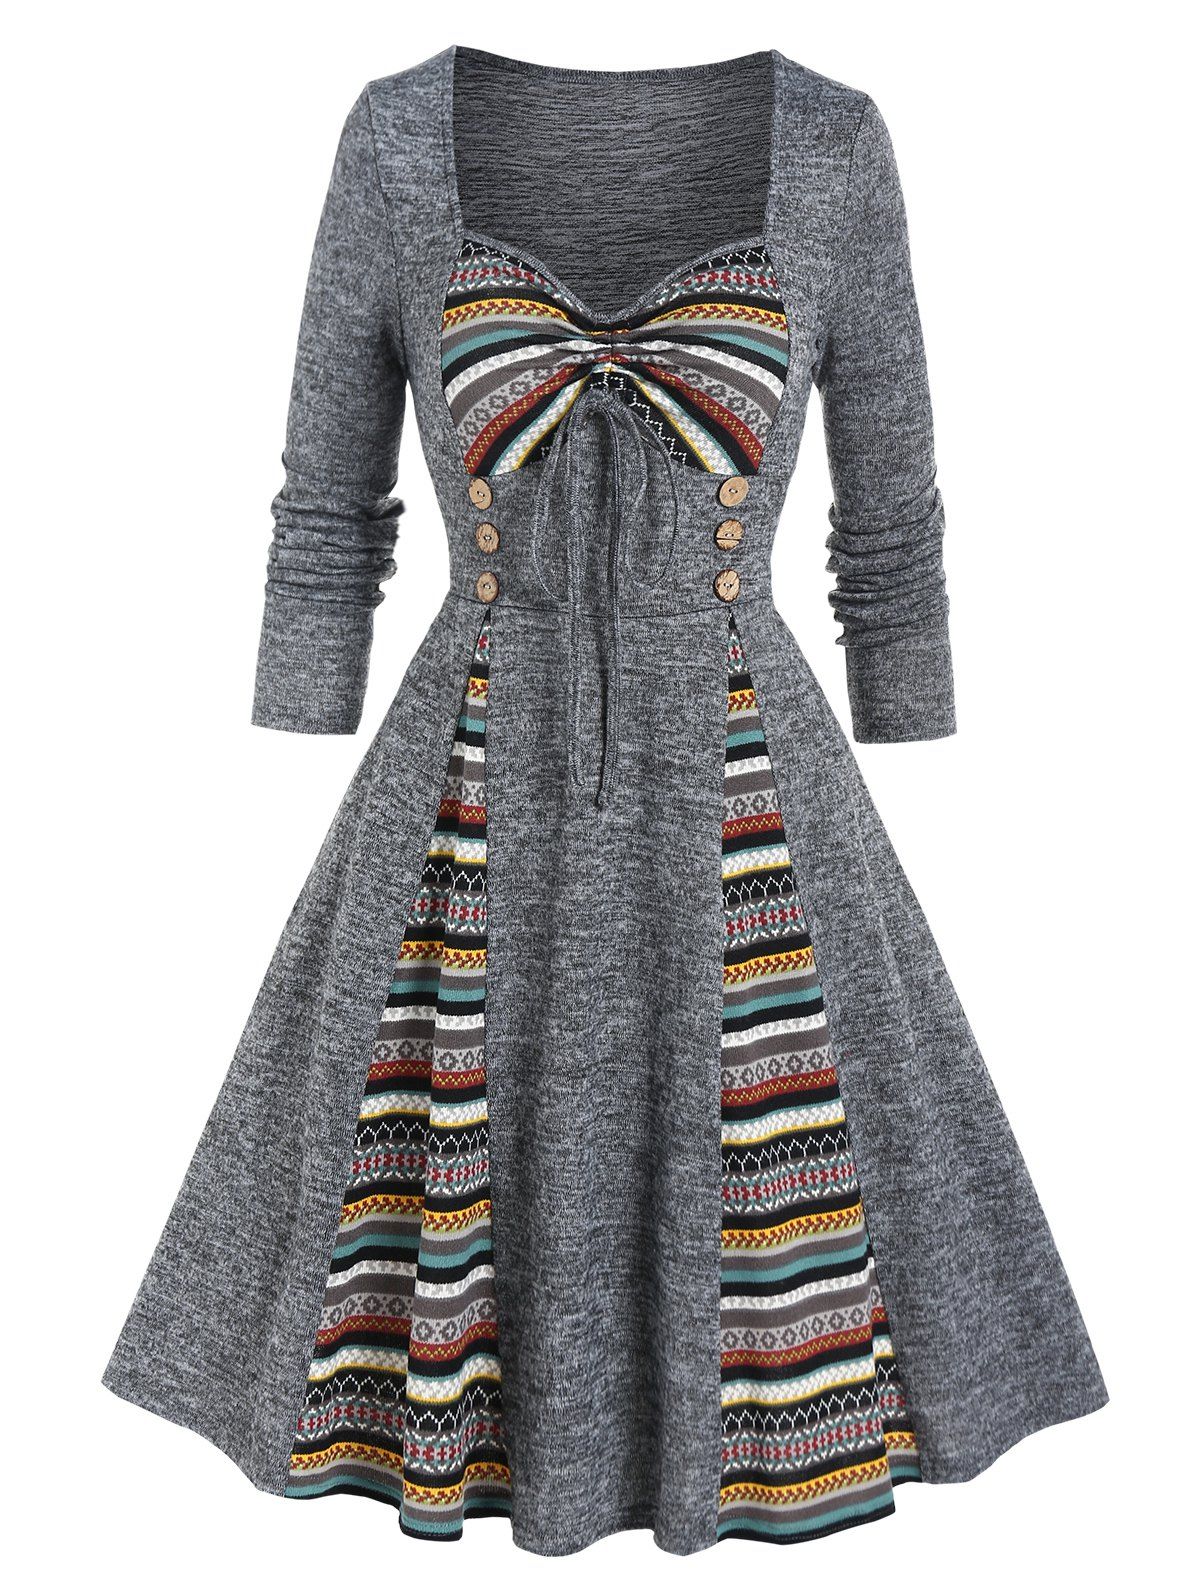 Colored Ethnic Striped Print Panel Dress Godet Bowknot Empire Waist Long Sleeve A Line Midi Dress - GRAY L